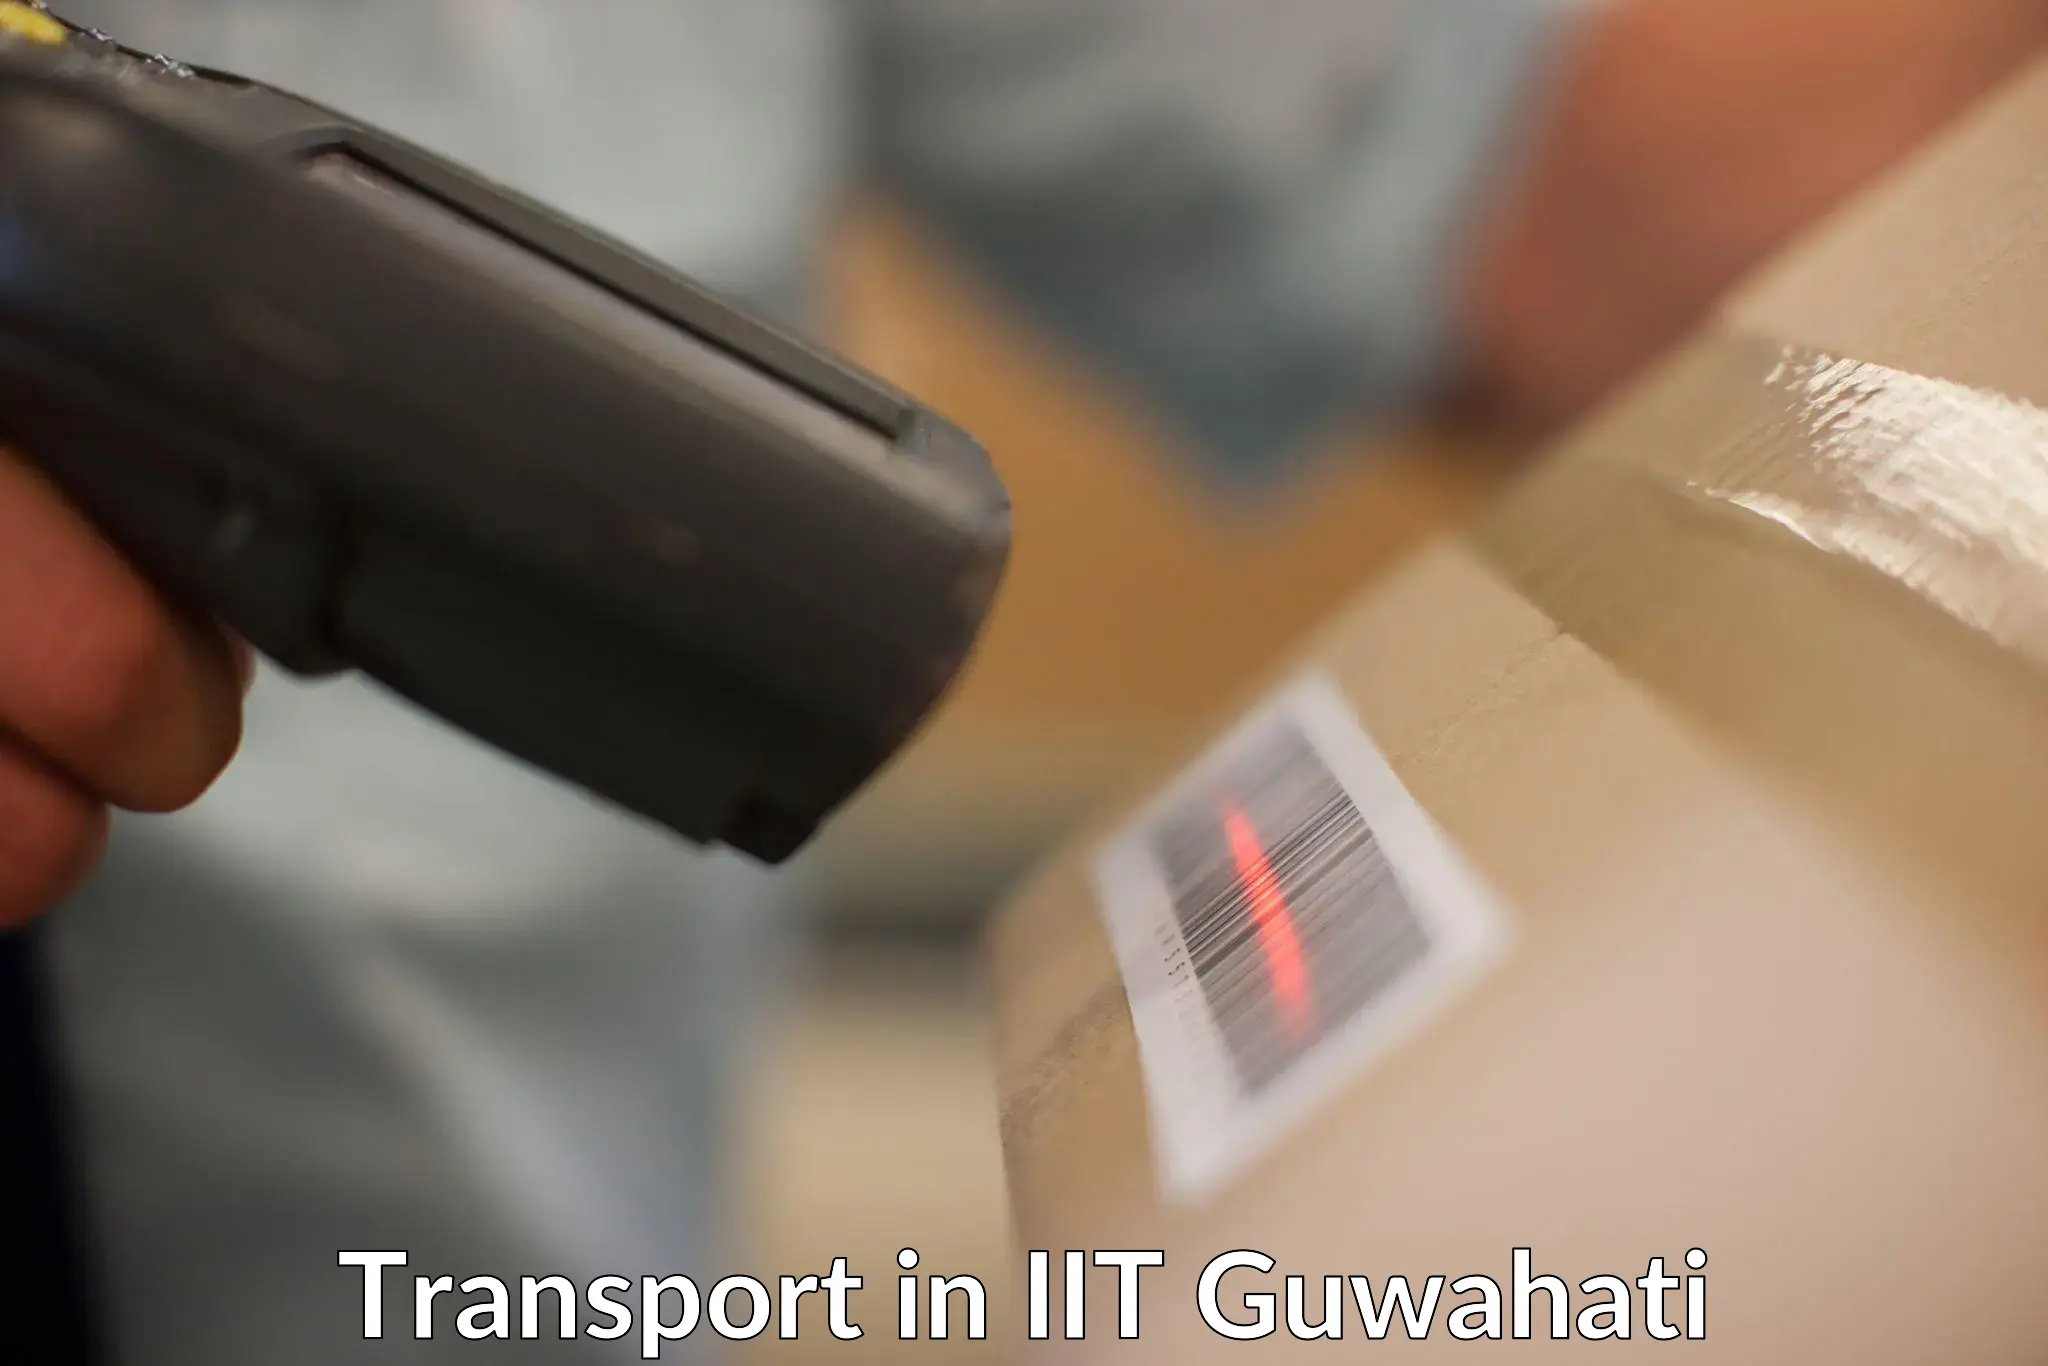 Furniture transport service in IIT Guwahati